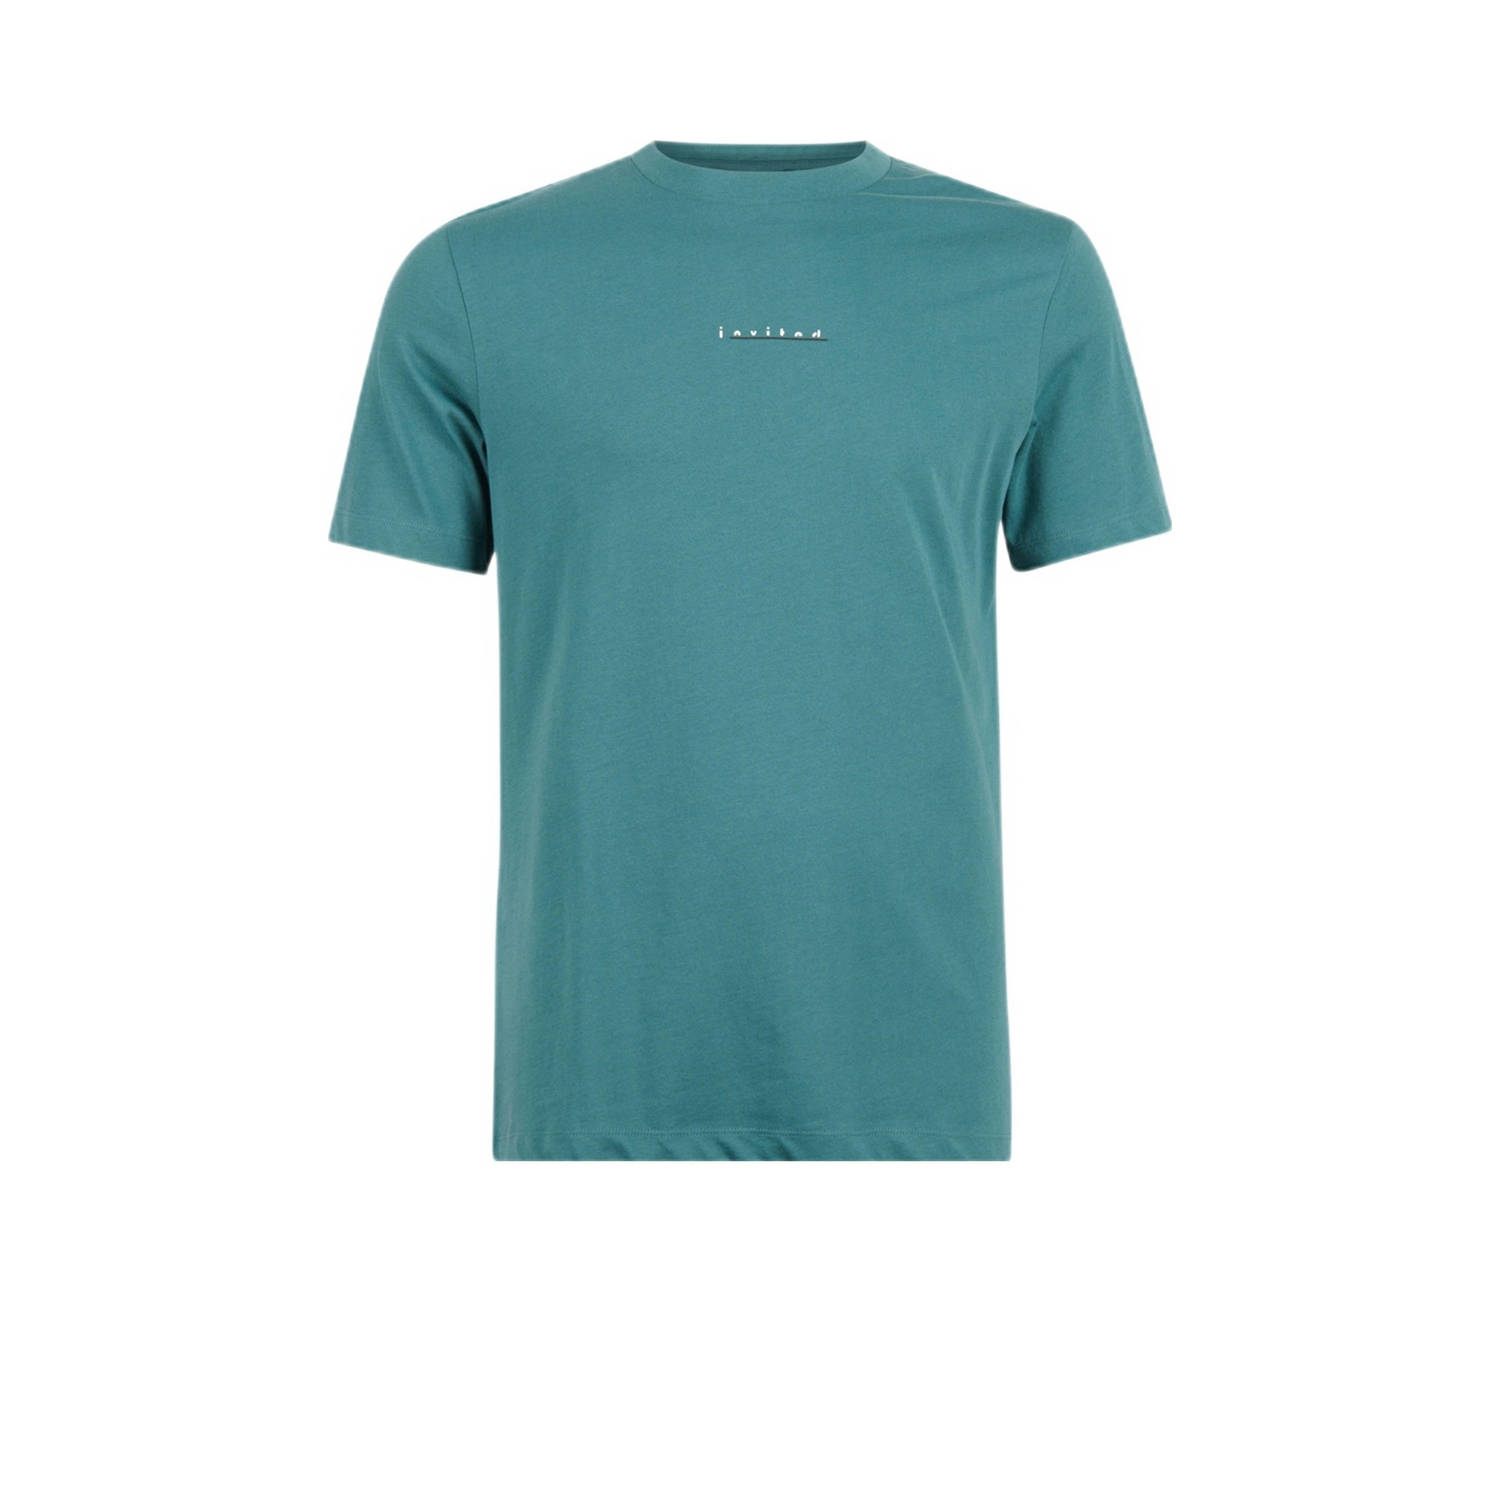 Shoeby T-shirt met printopdruk turquoise